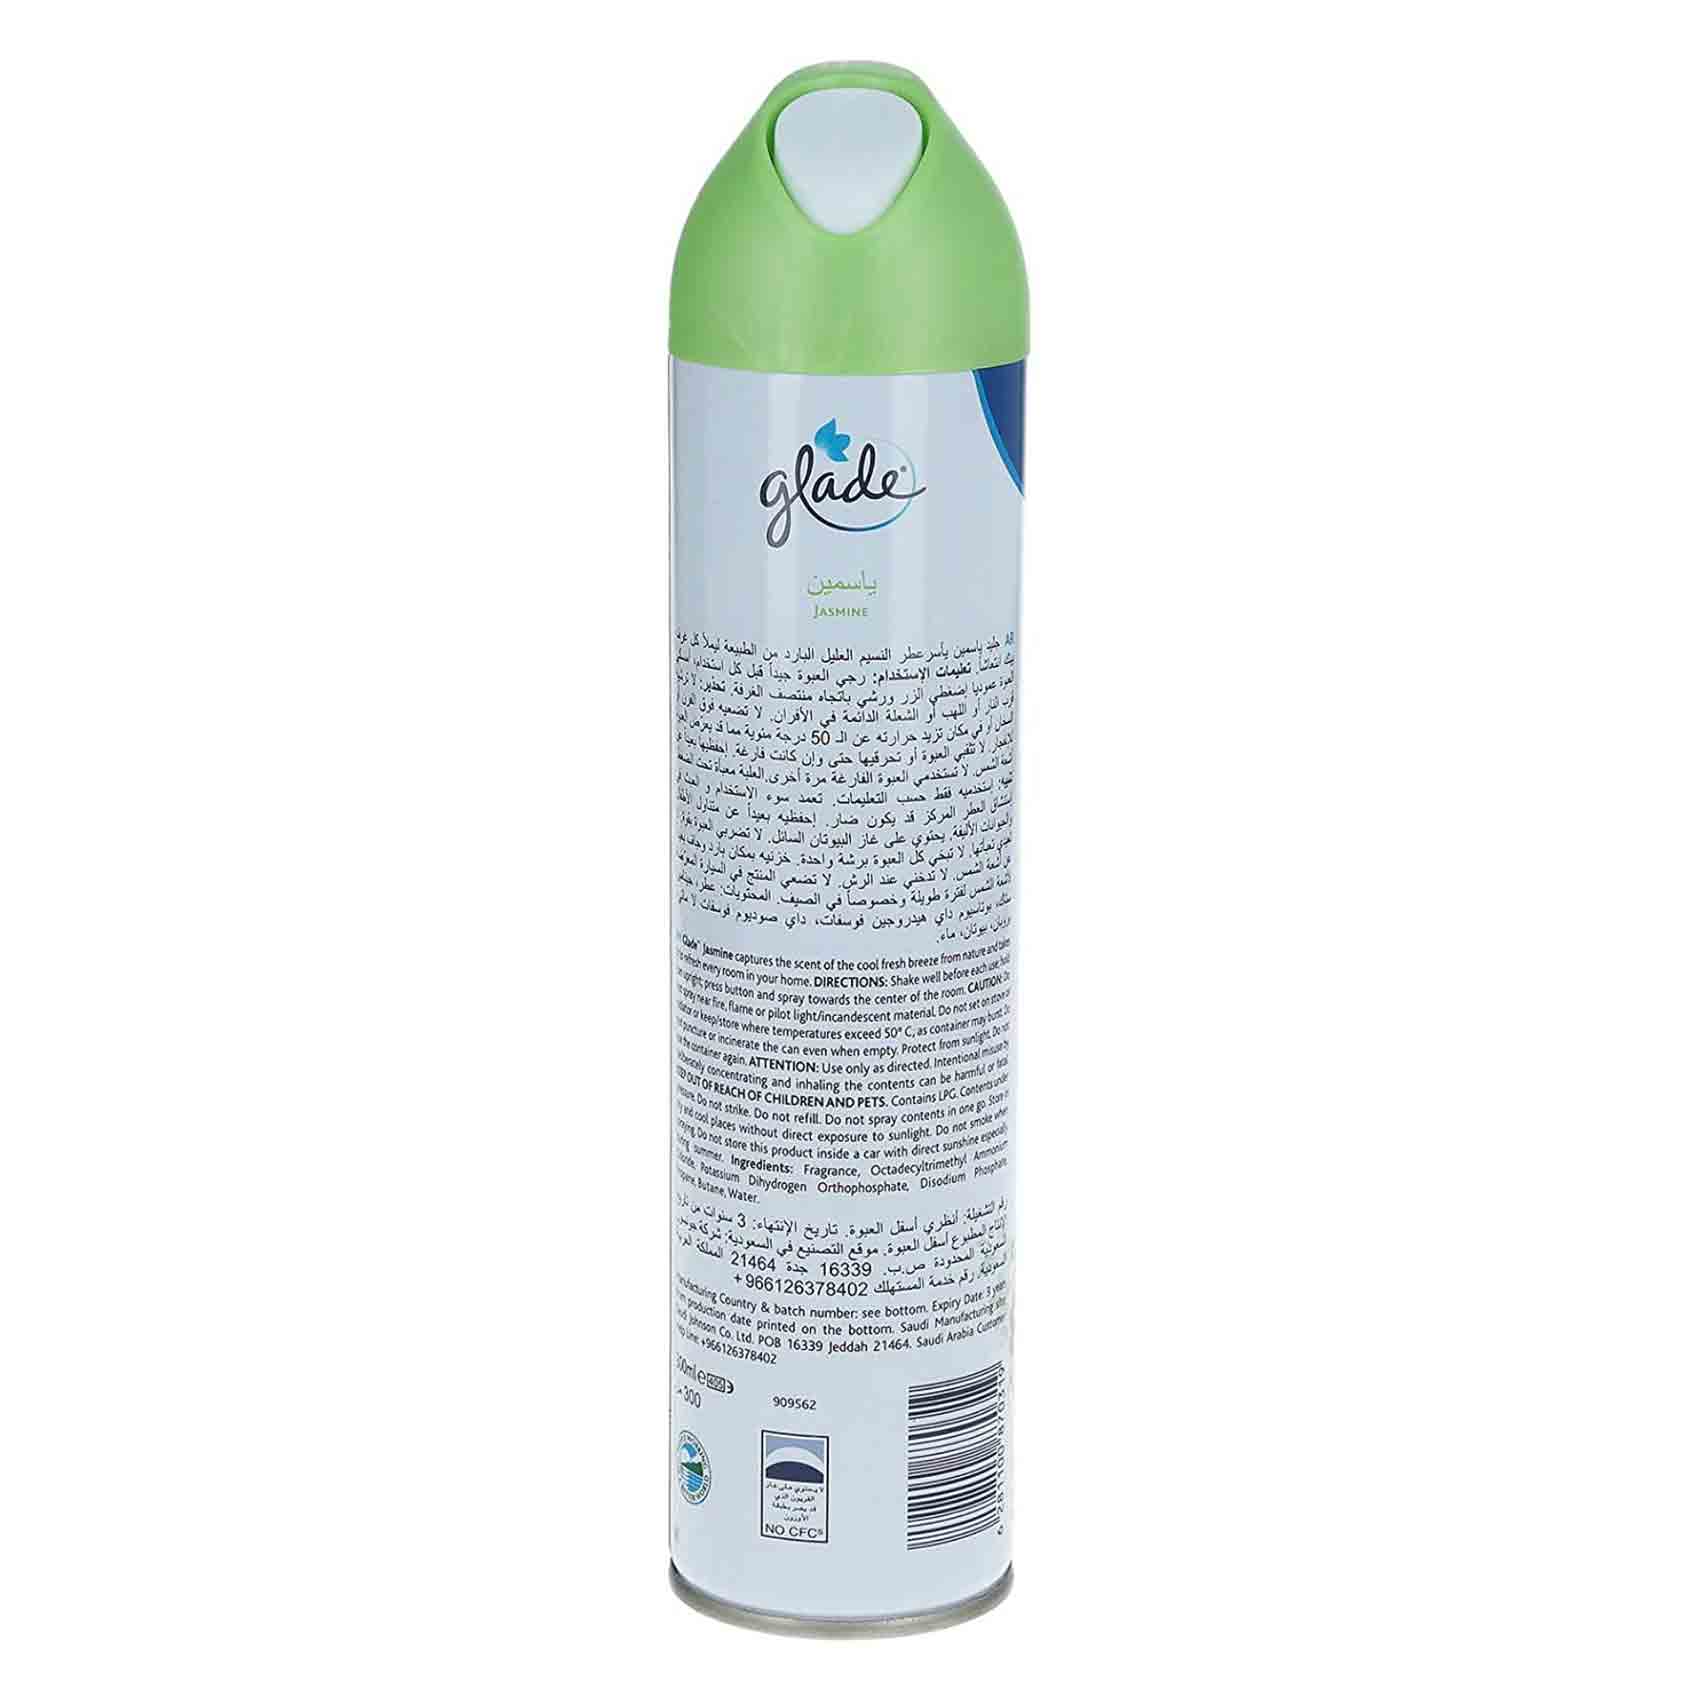 Glade Jasmine Air Freshener Spray 300ml